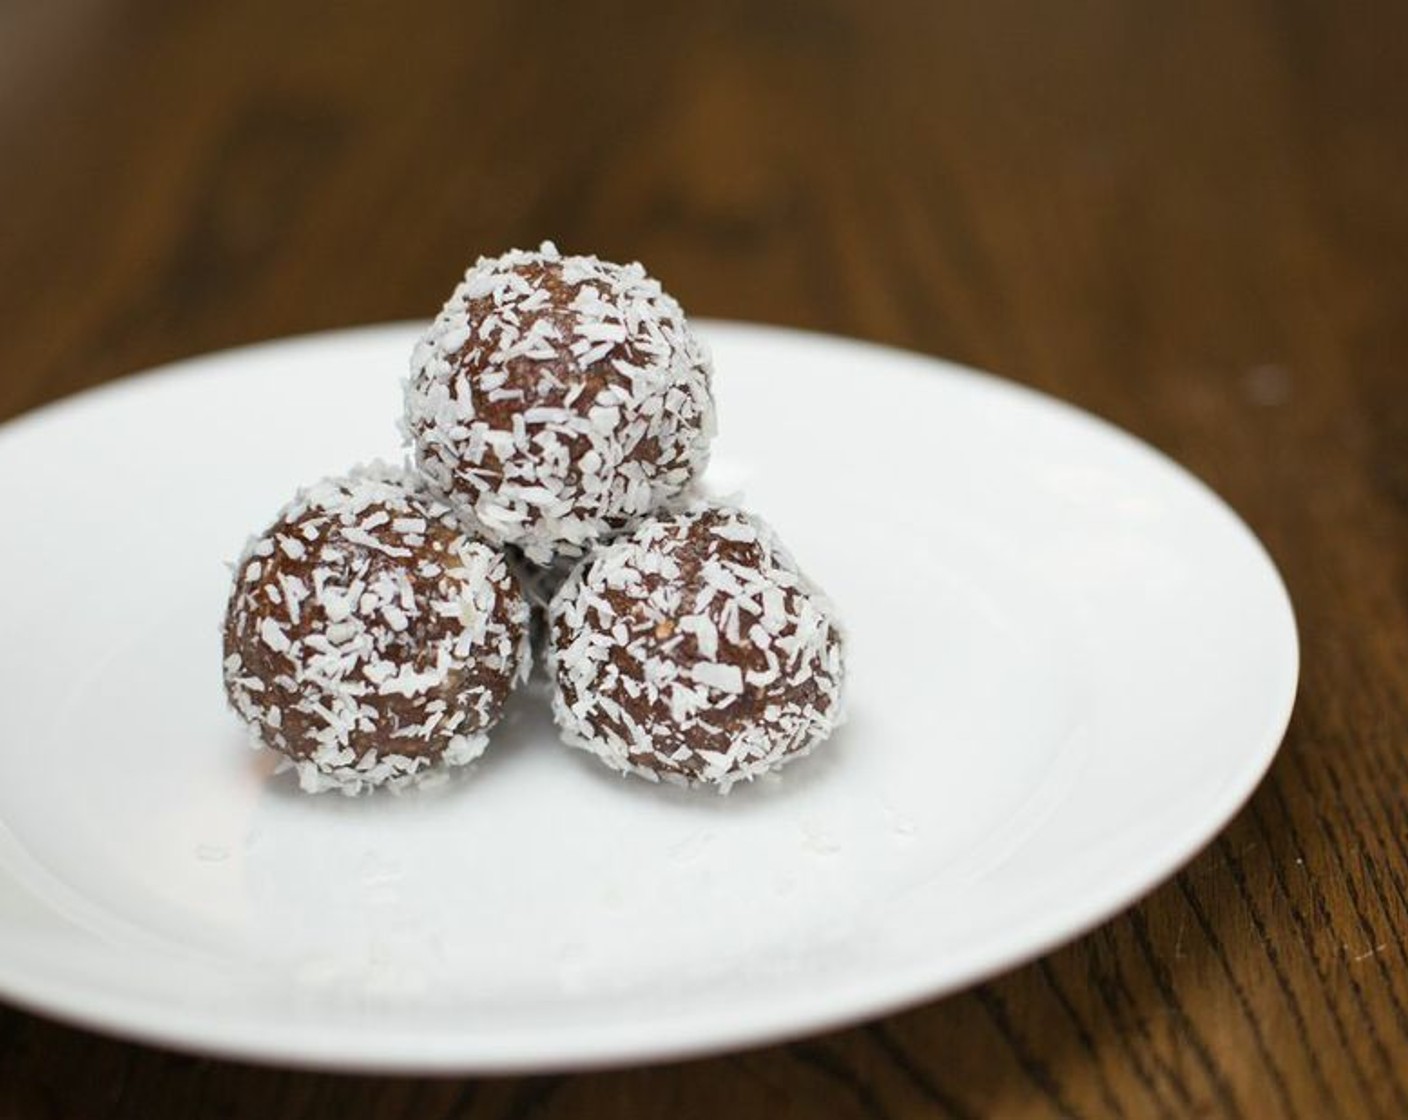 Chocolate Coconut Bliss Balls